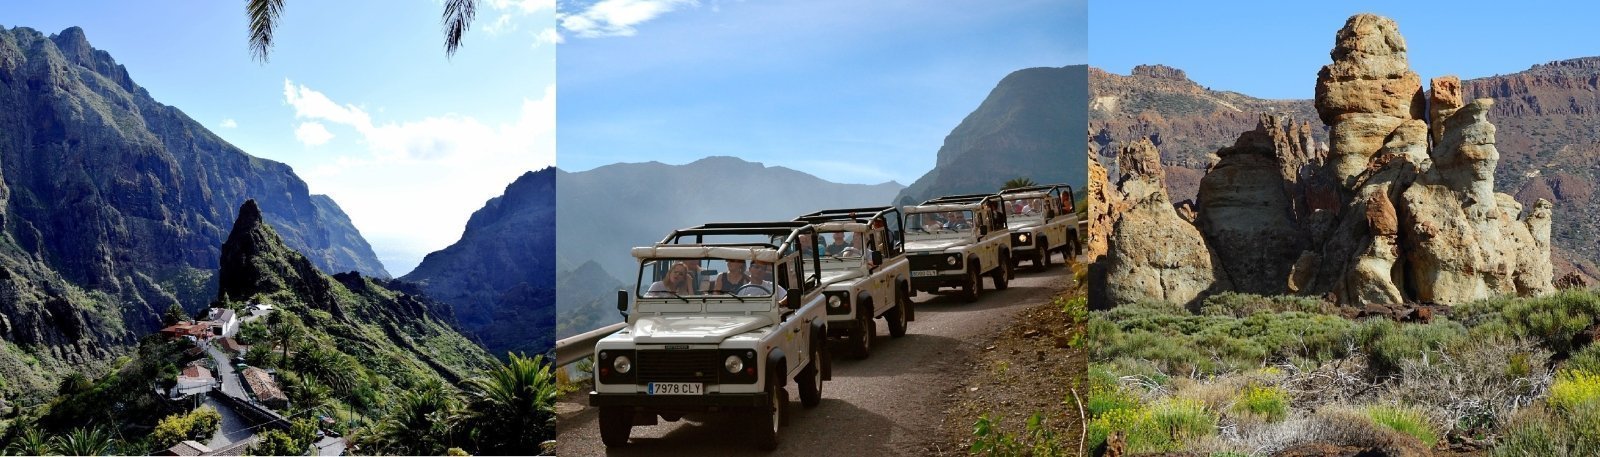 Tenerife Jeep Safari